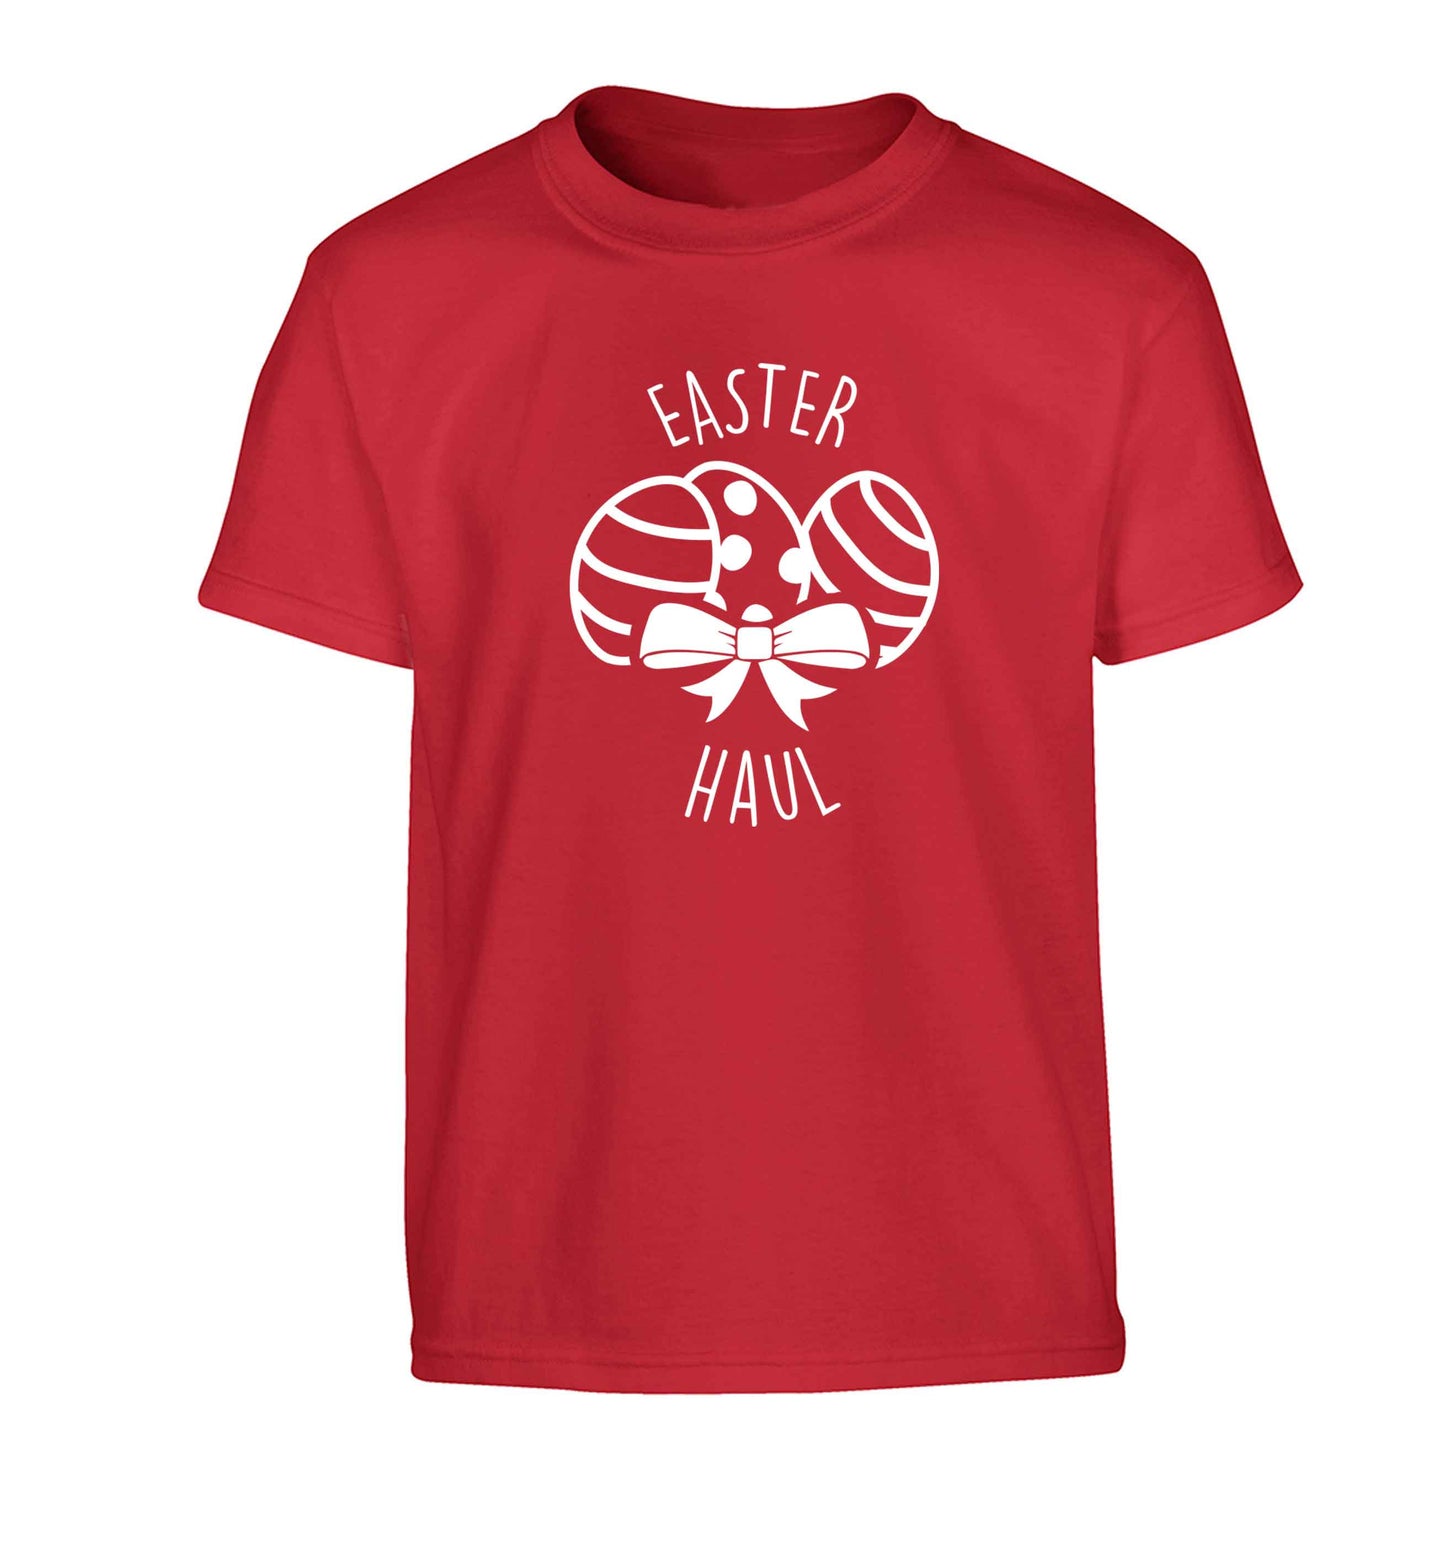 Easter haul Children's red Tshirt 12-13 Years